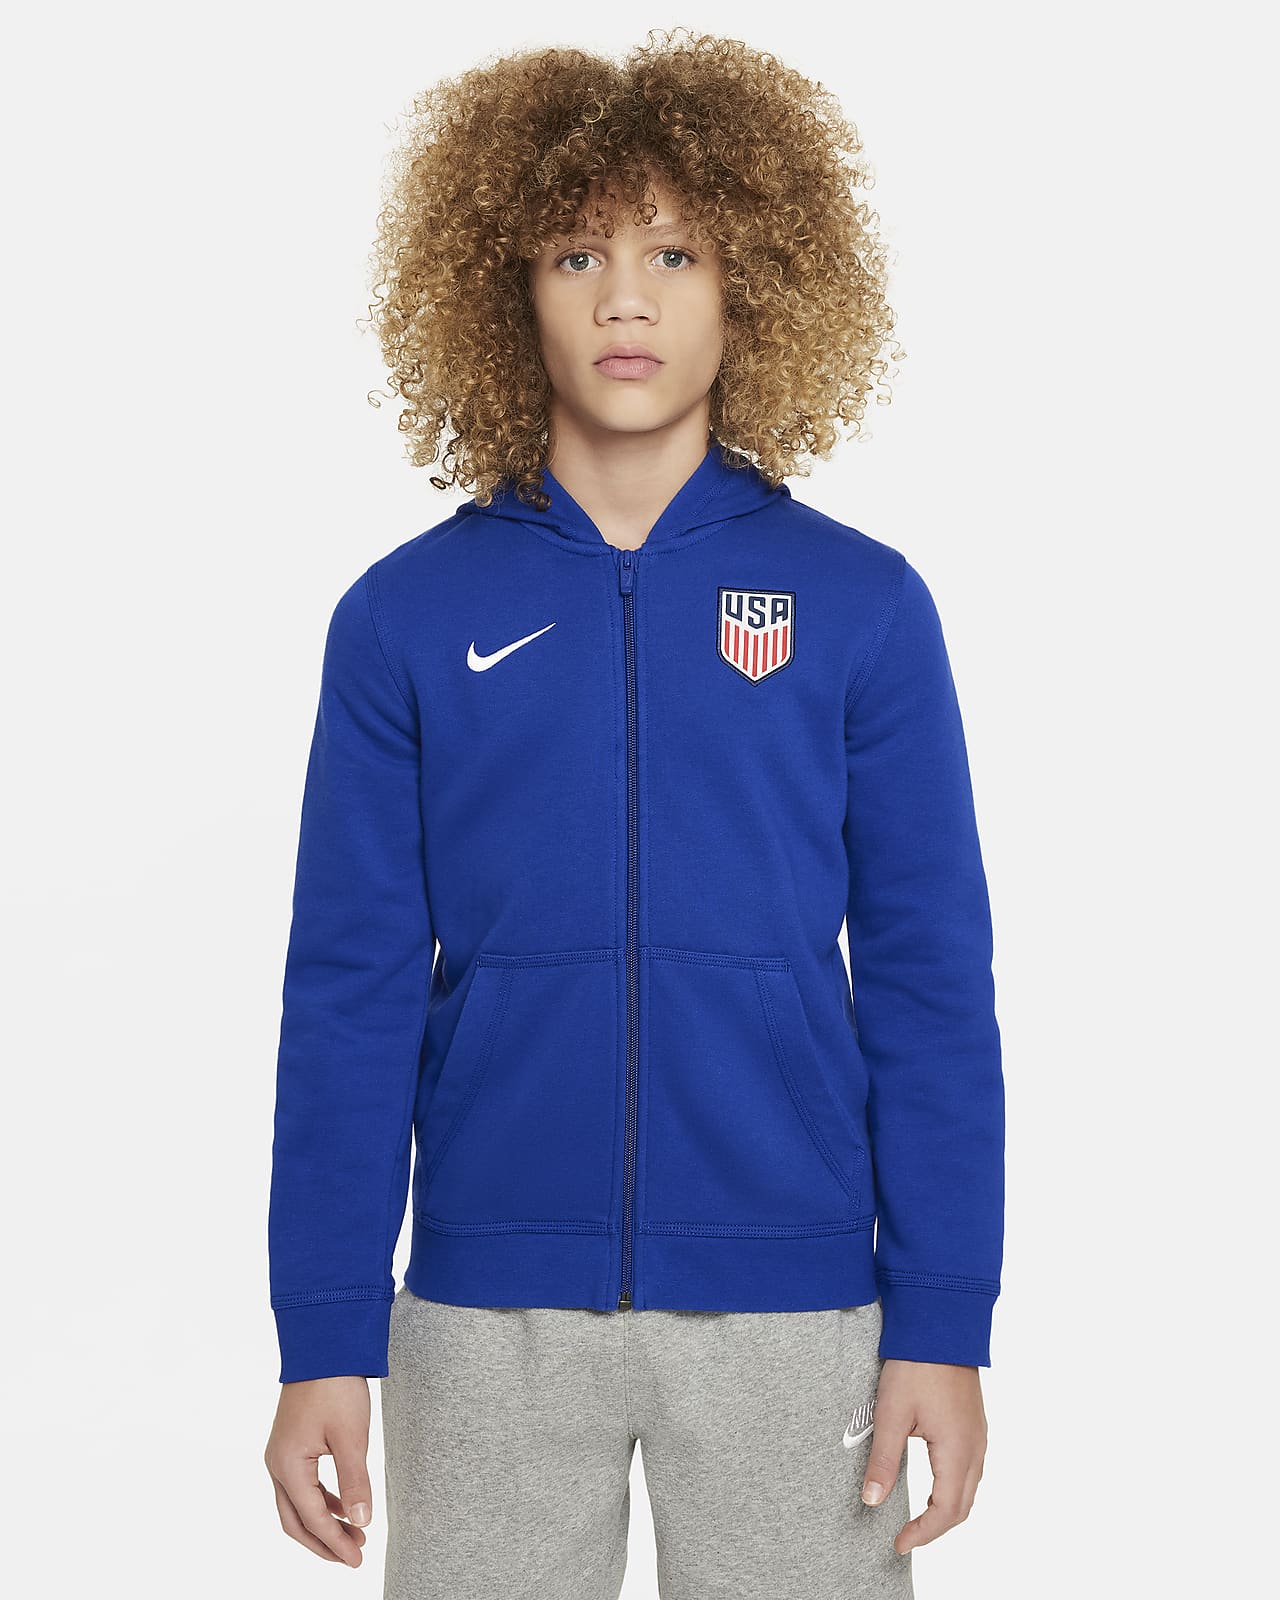 USMNT Club Big Kids' (Boys') Nike Soccer Full-Zip French Terry Hoodie